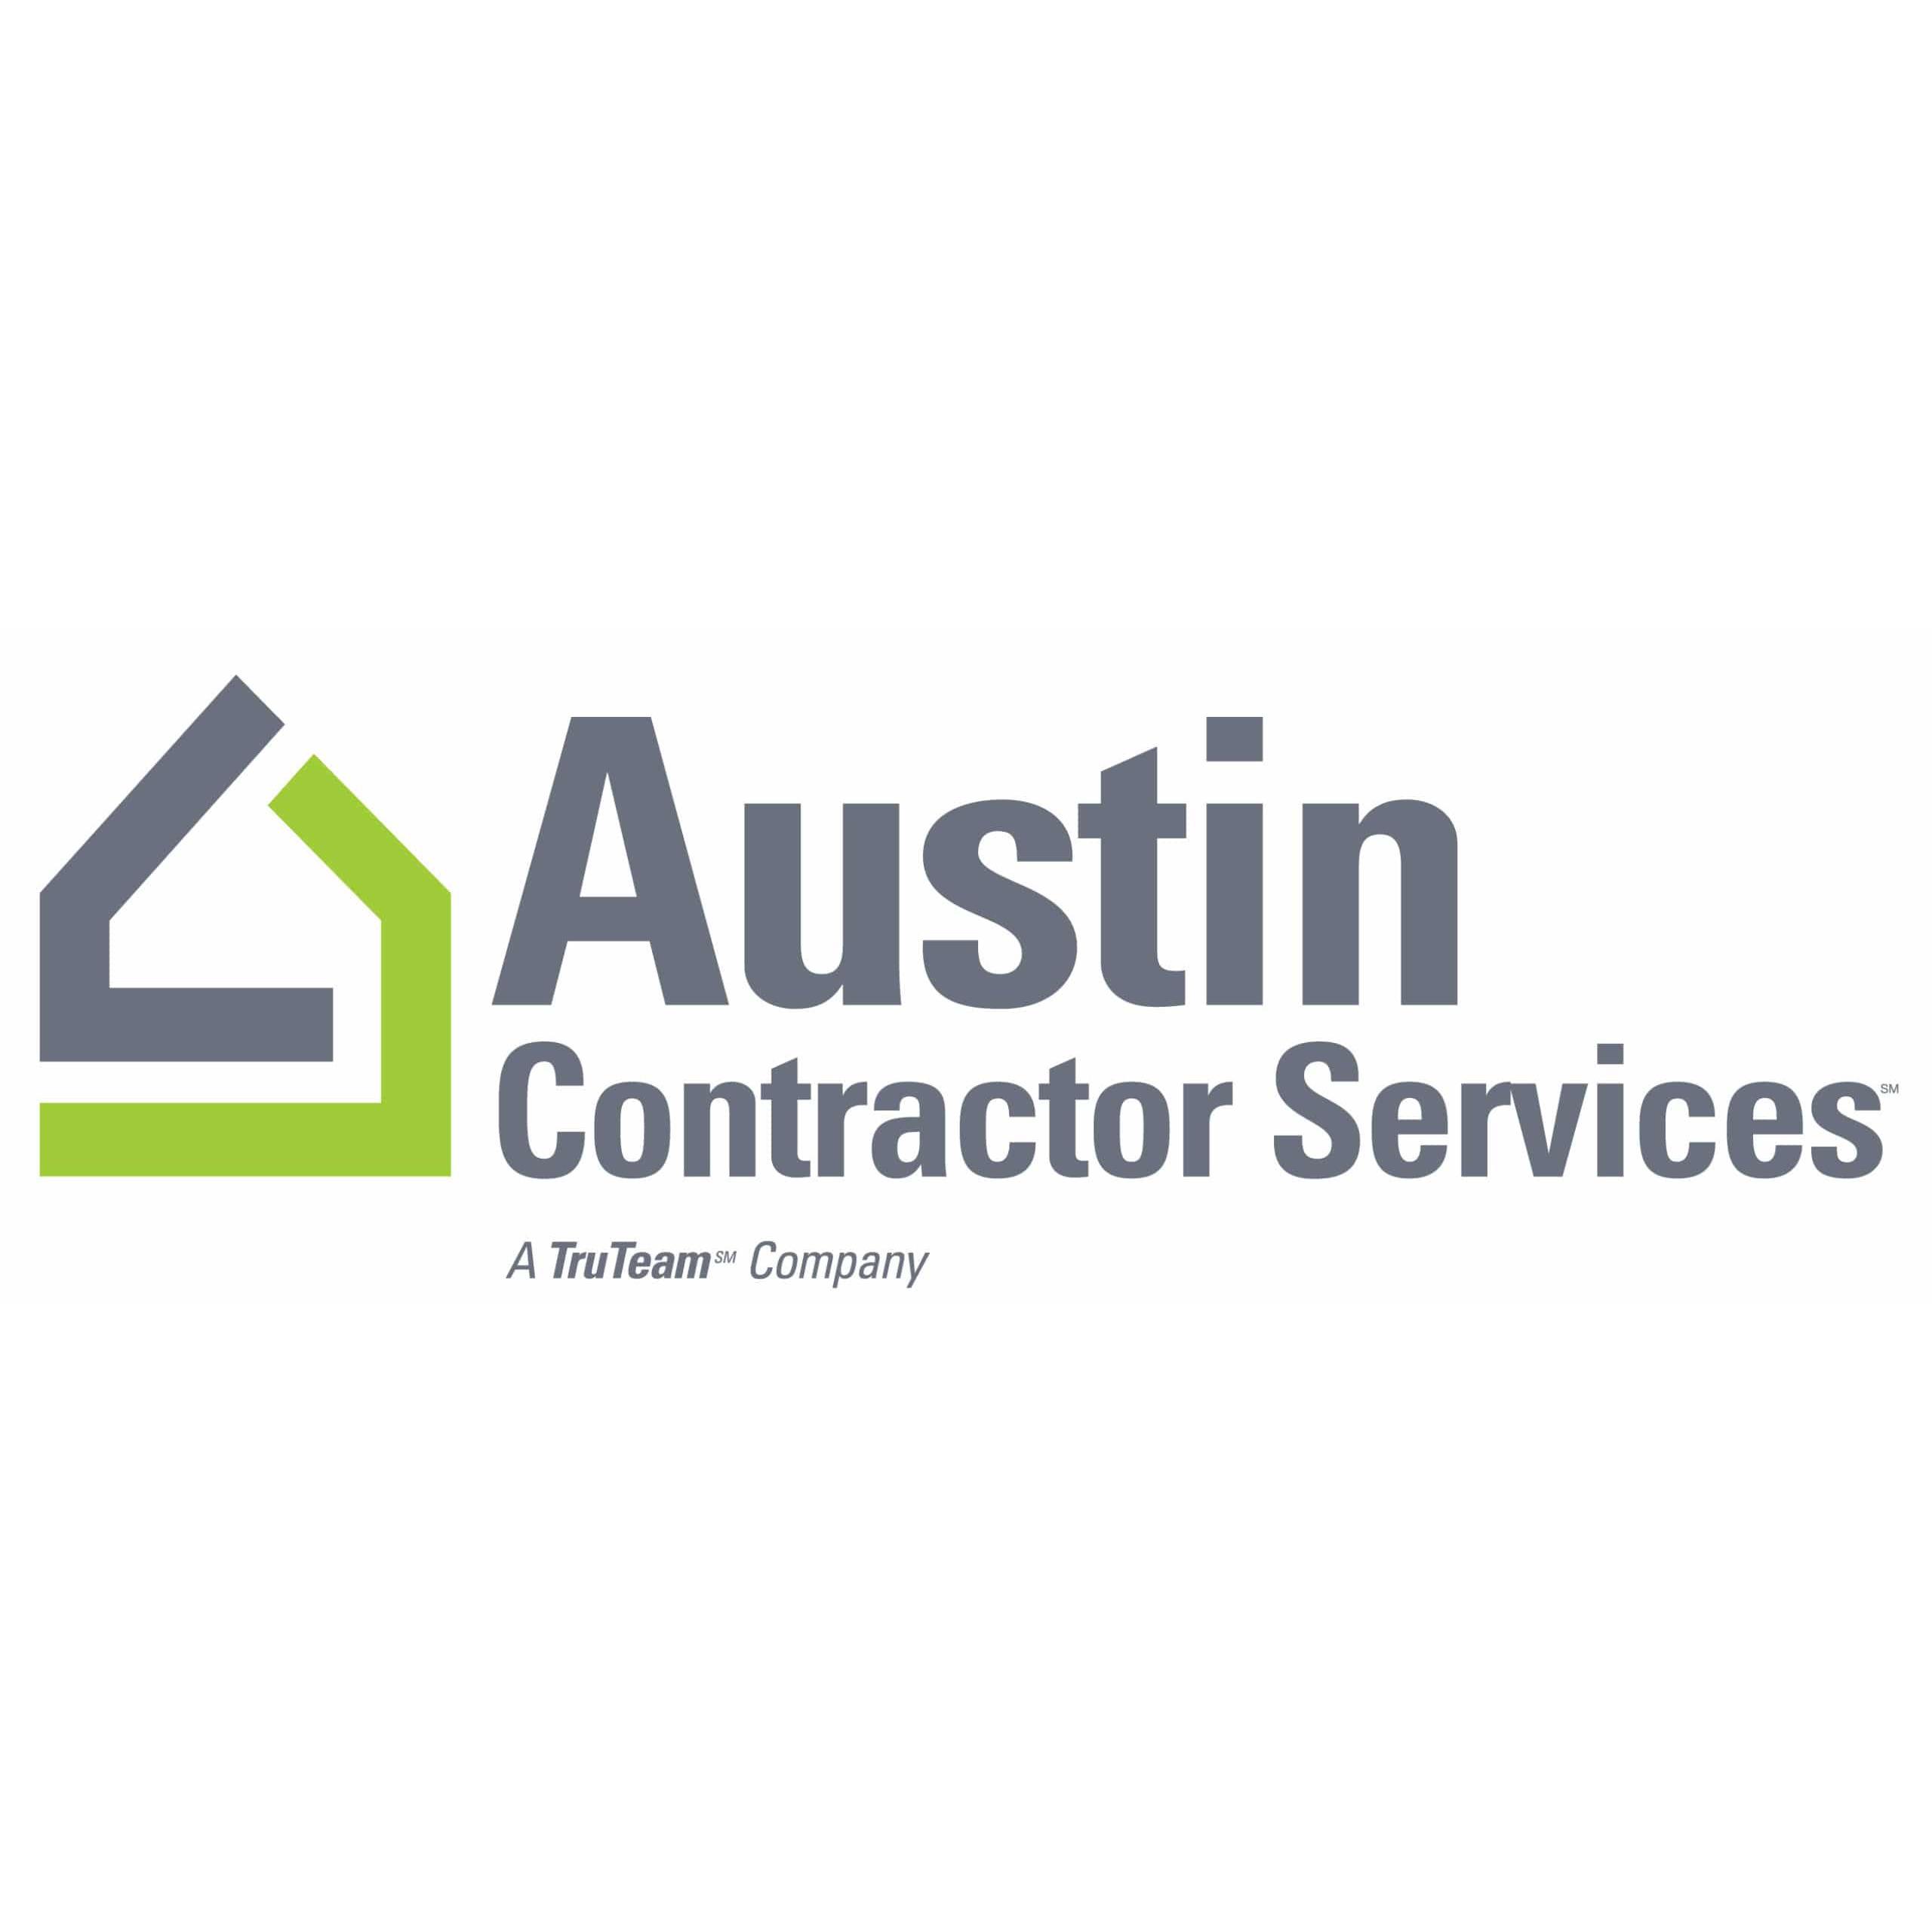 Austin Contractor Services